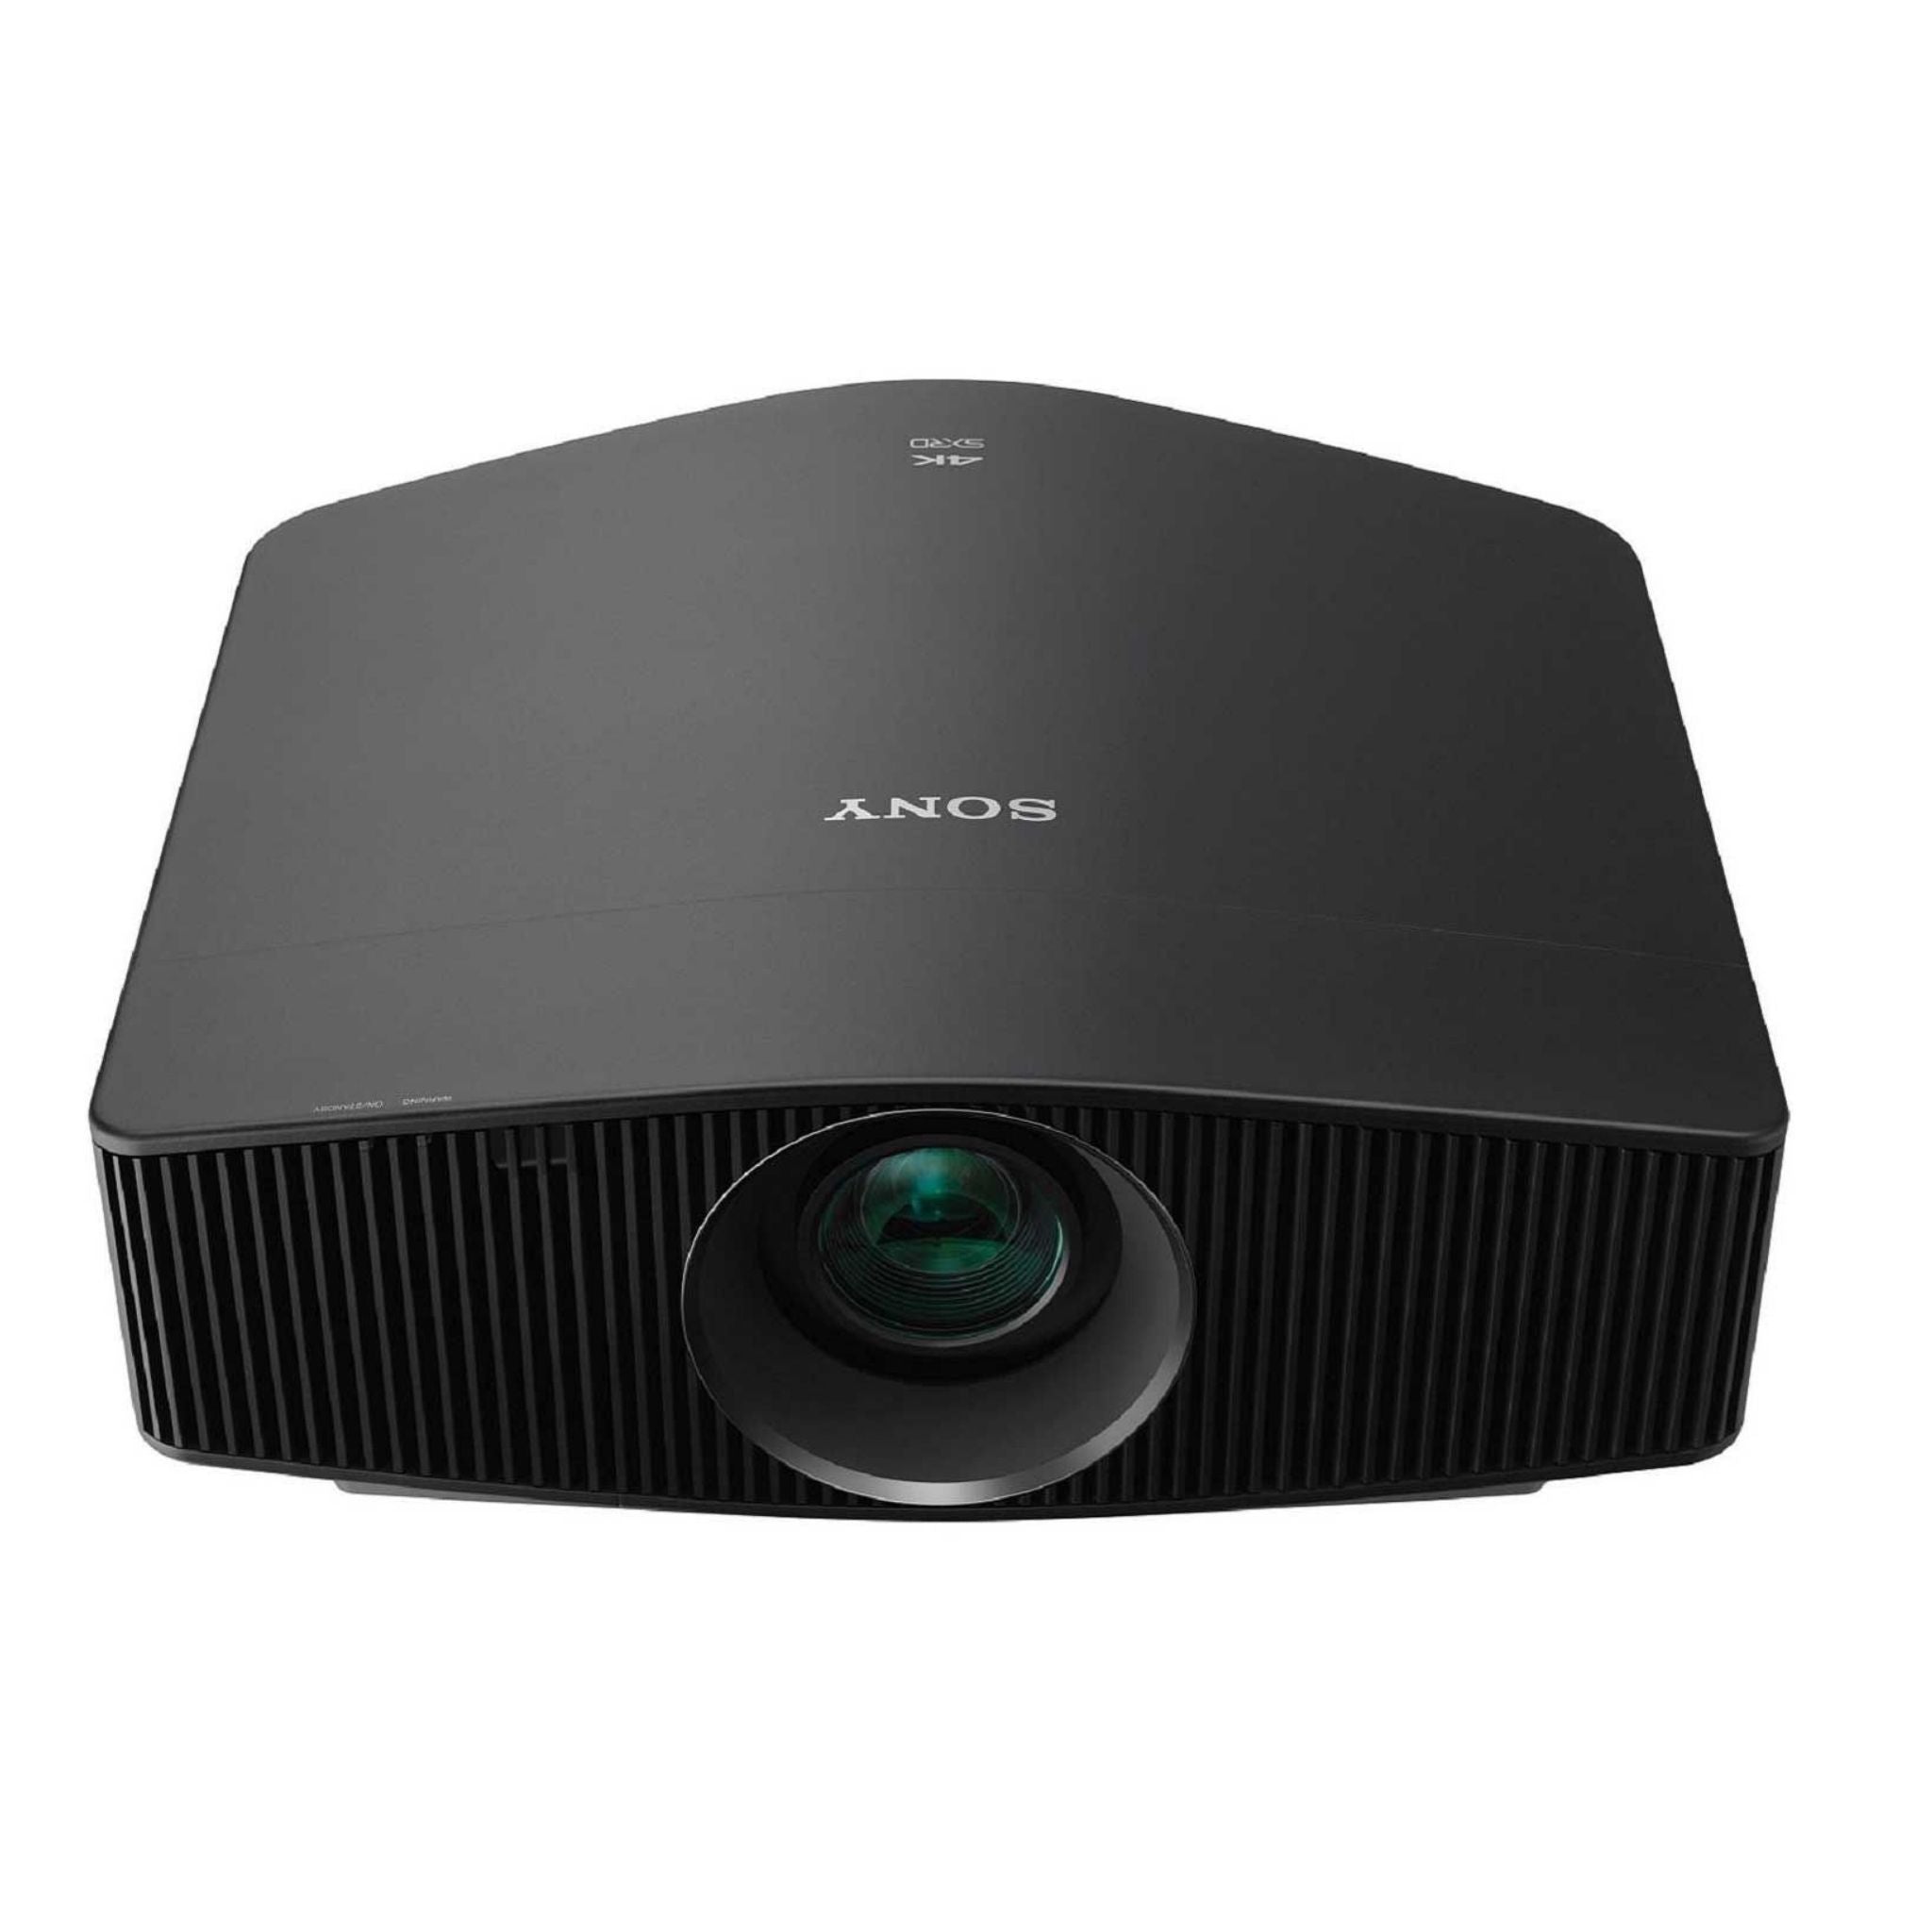 Sony VPL-VW790ES - Native 4K Laser Home Theatre Projector - AVStore